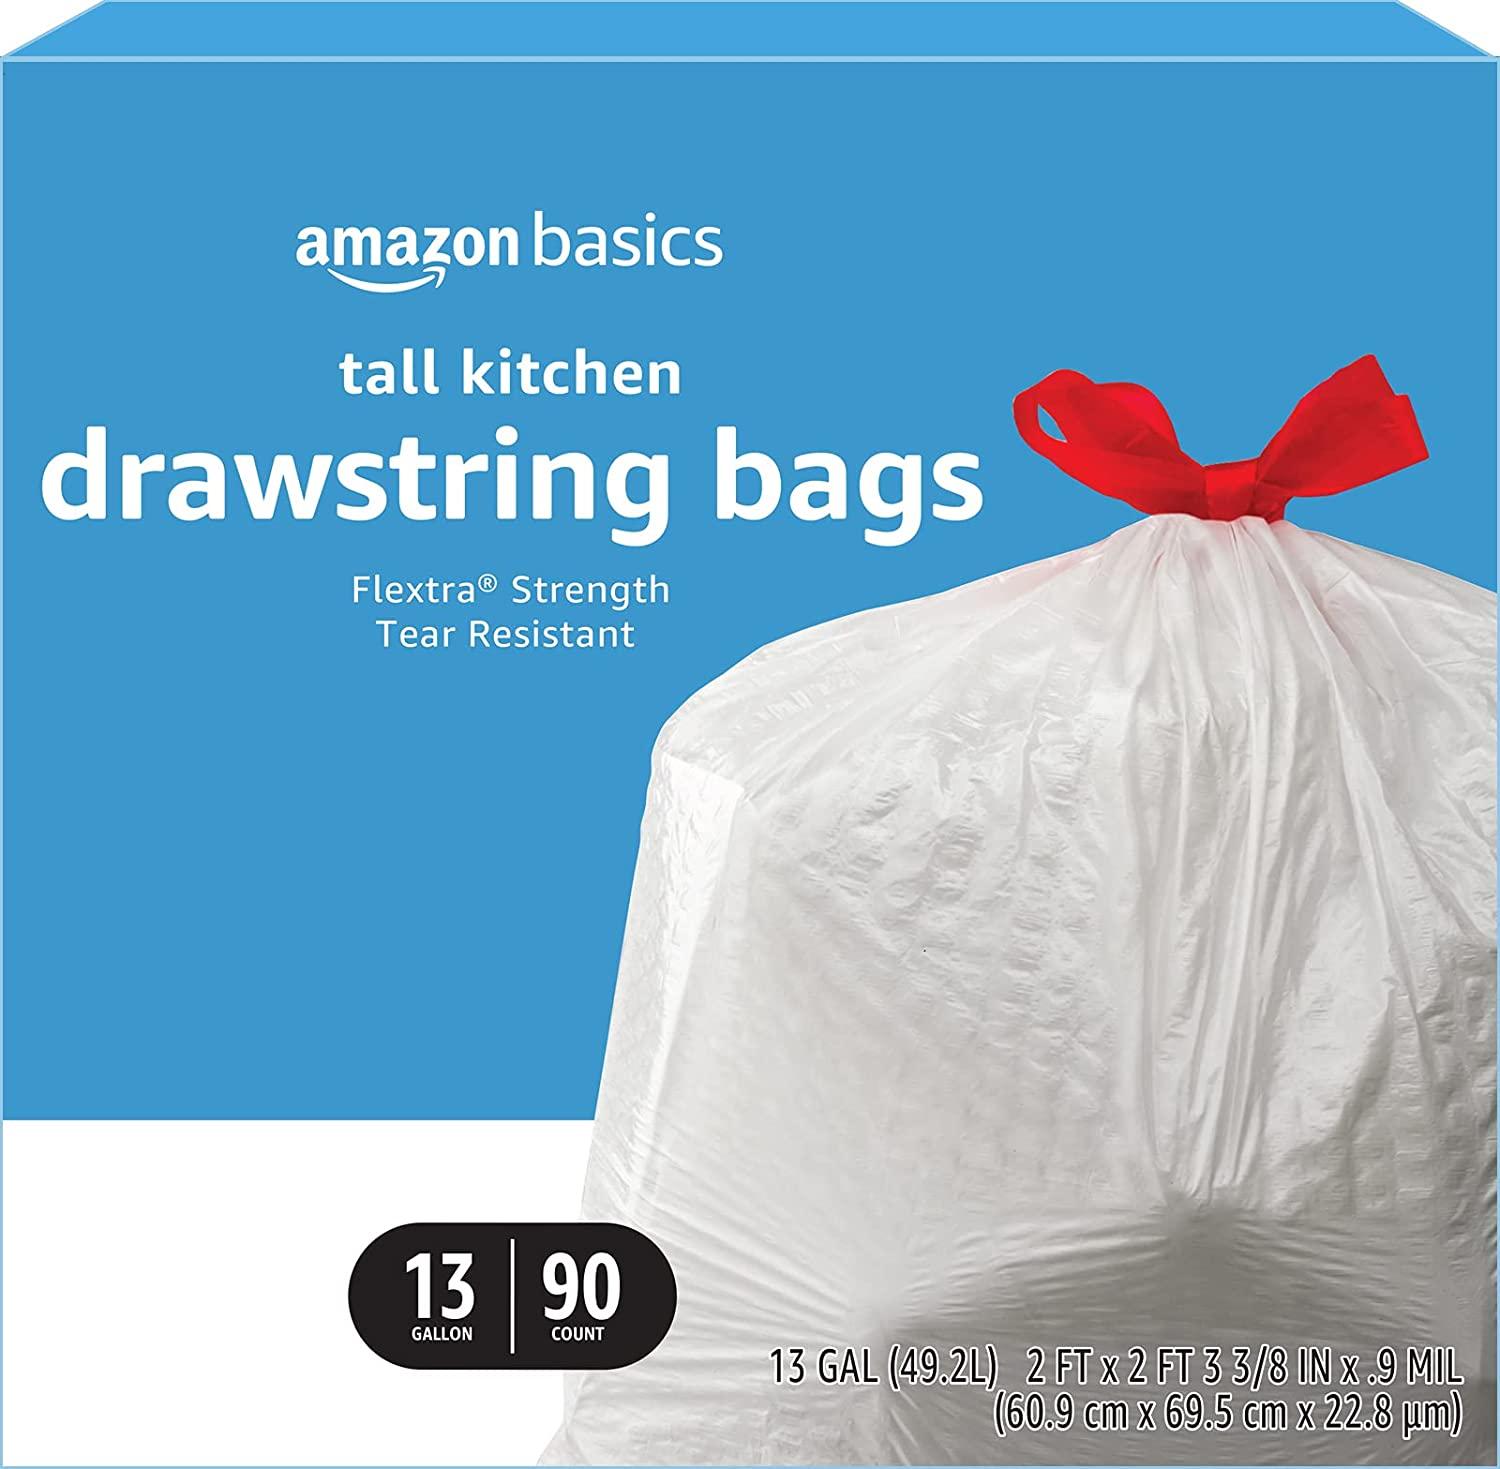 13 Gallon Drawstring Kitchen Trash Bags - 90 count